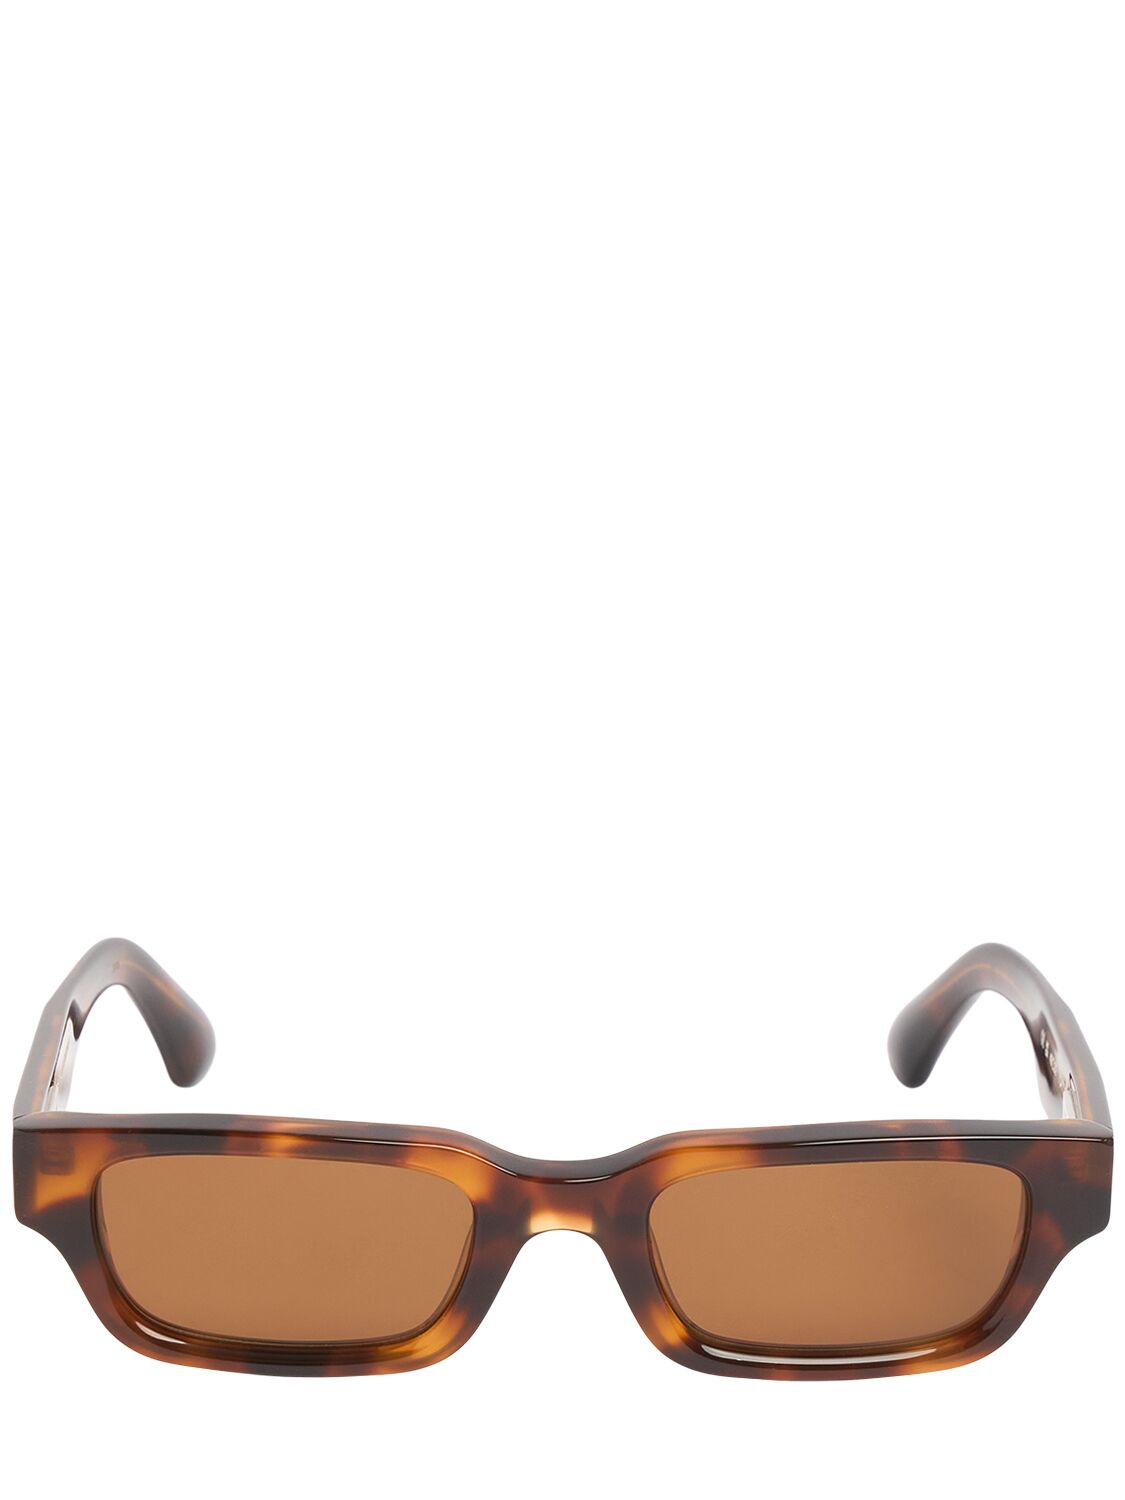 Chimi 10.3 Squared Acetate Sunglasses In Brown